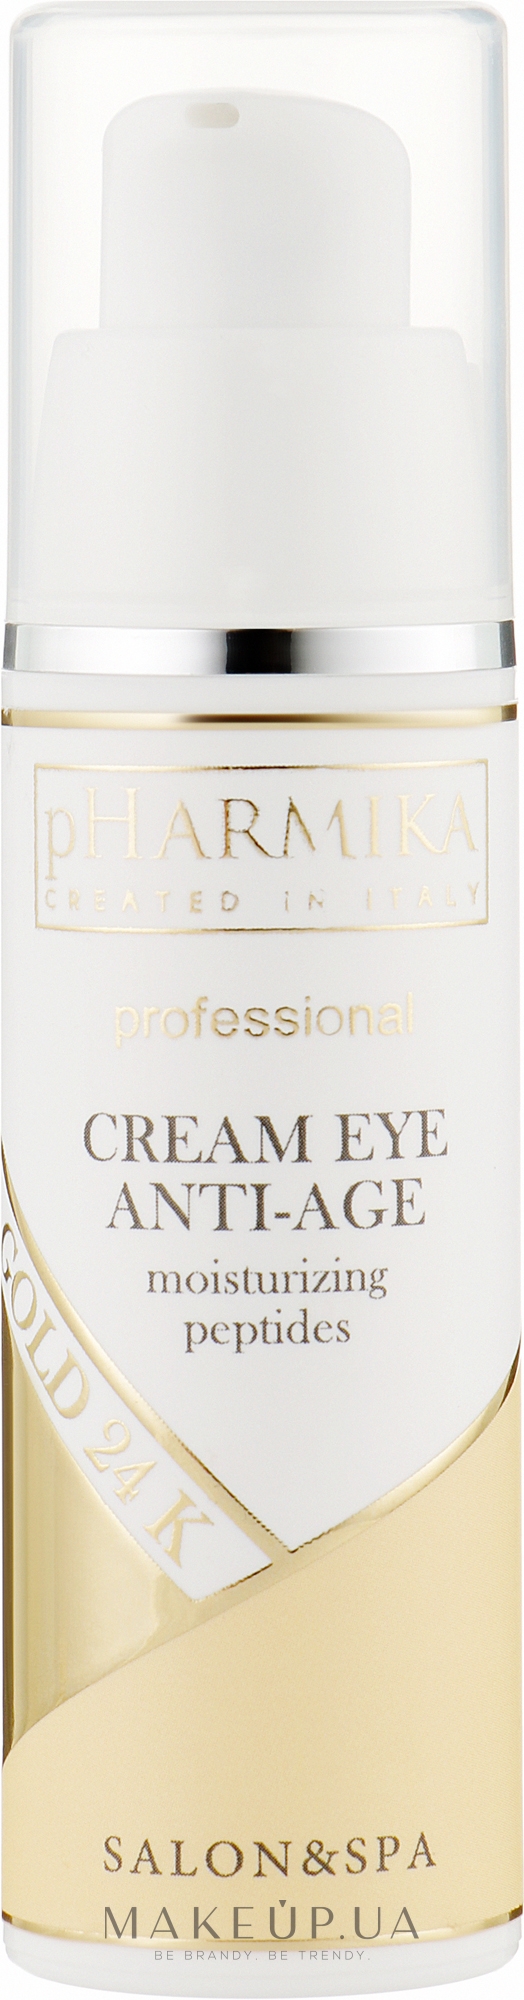 Крем под глаза с пептидами - pHarmika Cream Eye Anti-Age Moisturizing Peptides — фото 30ml